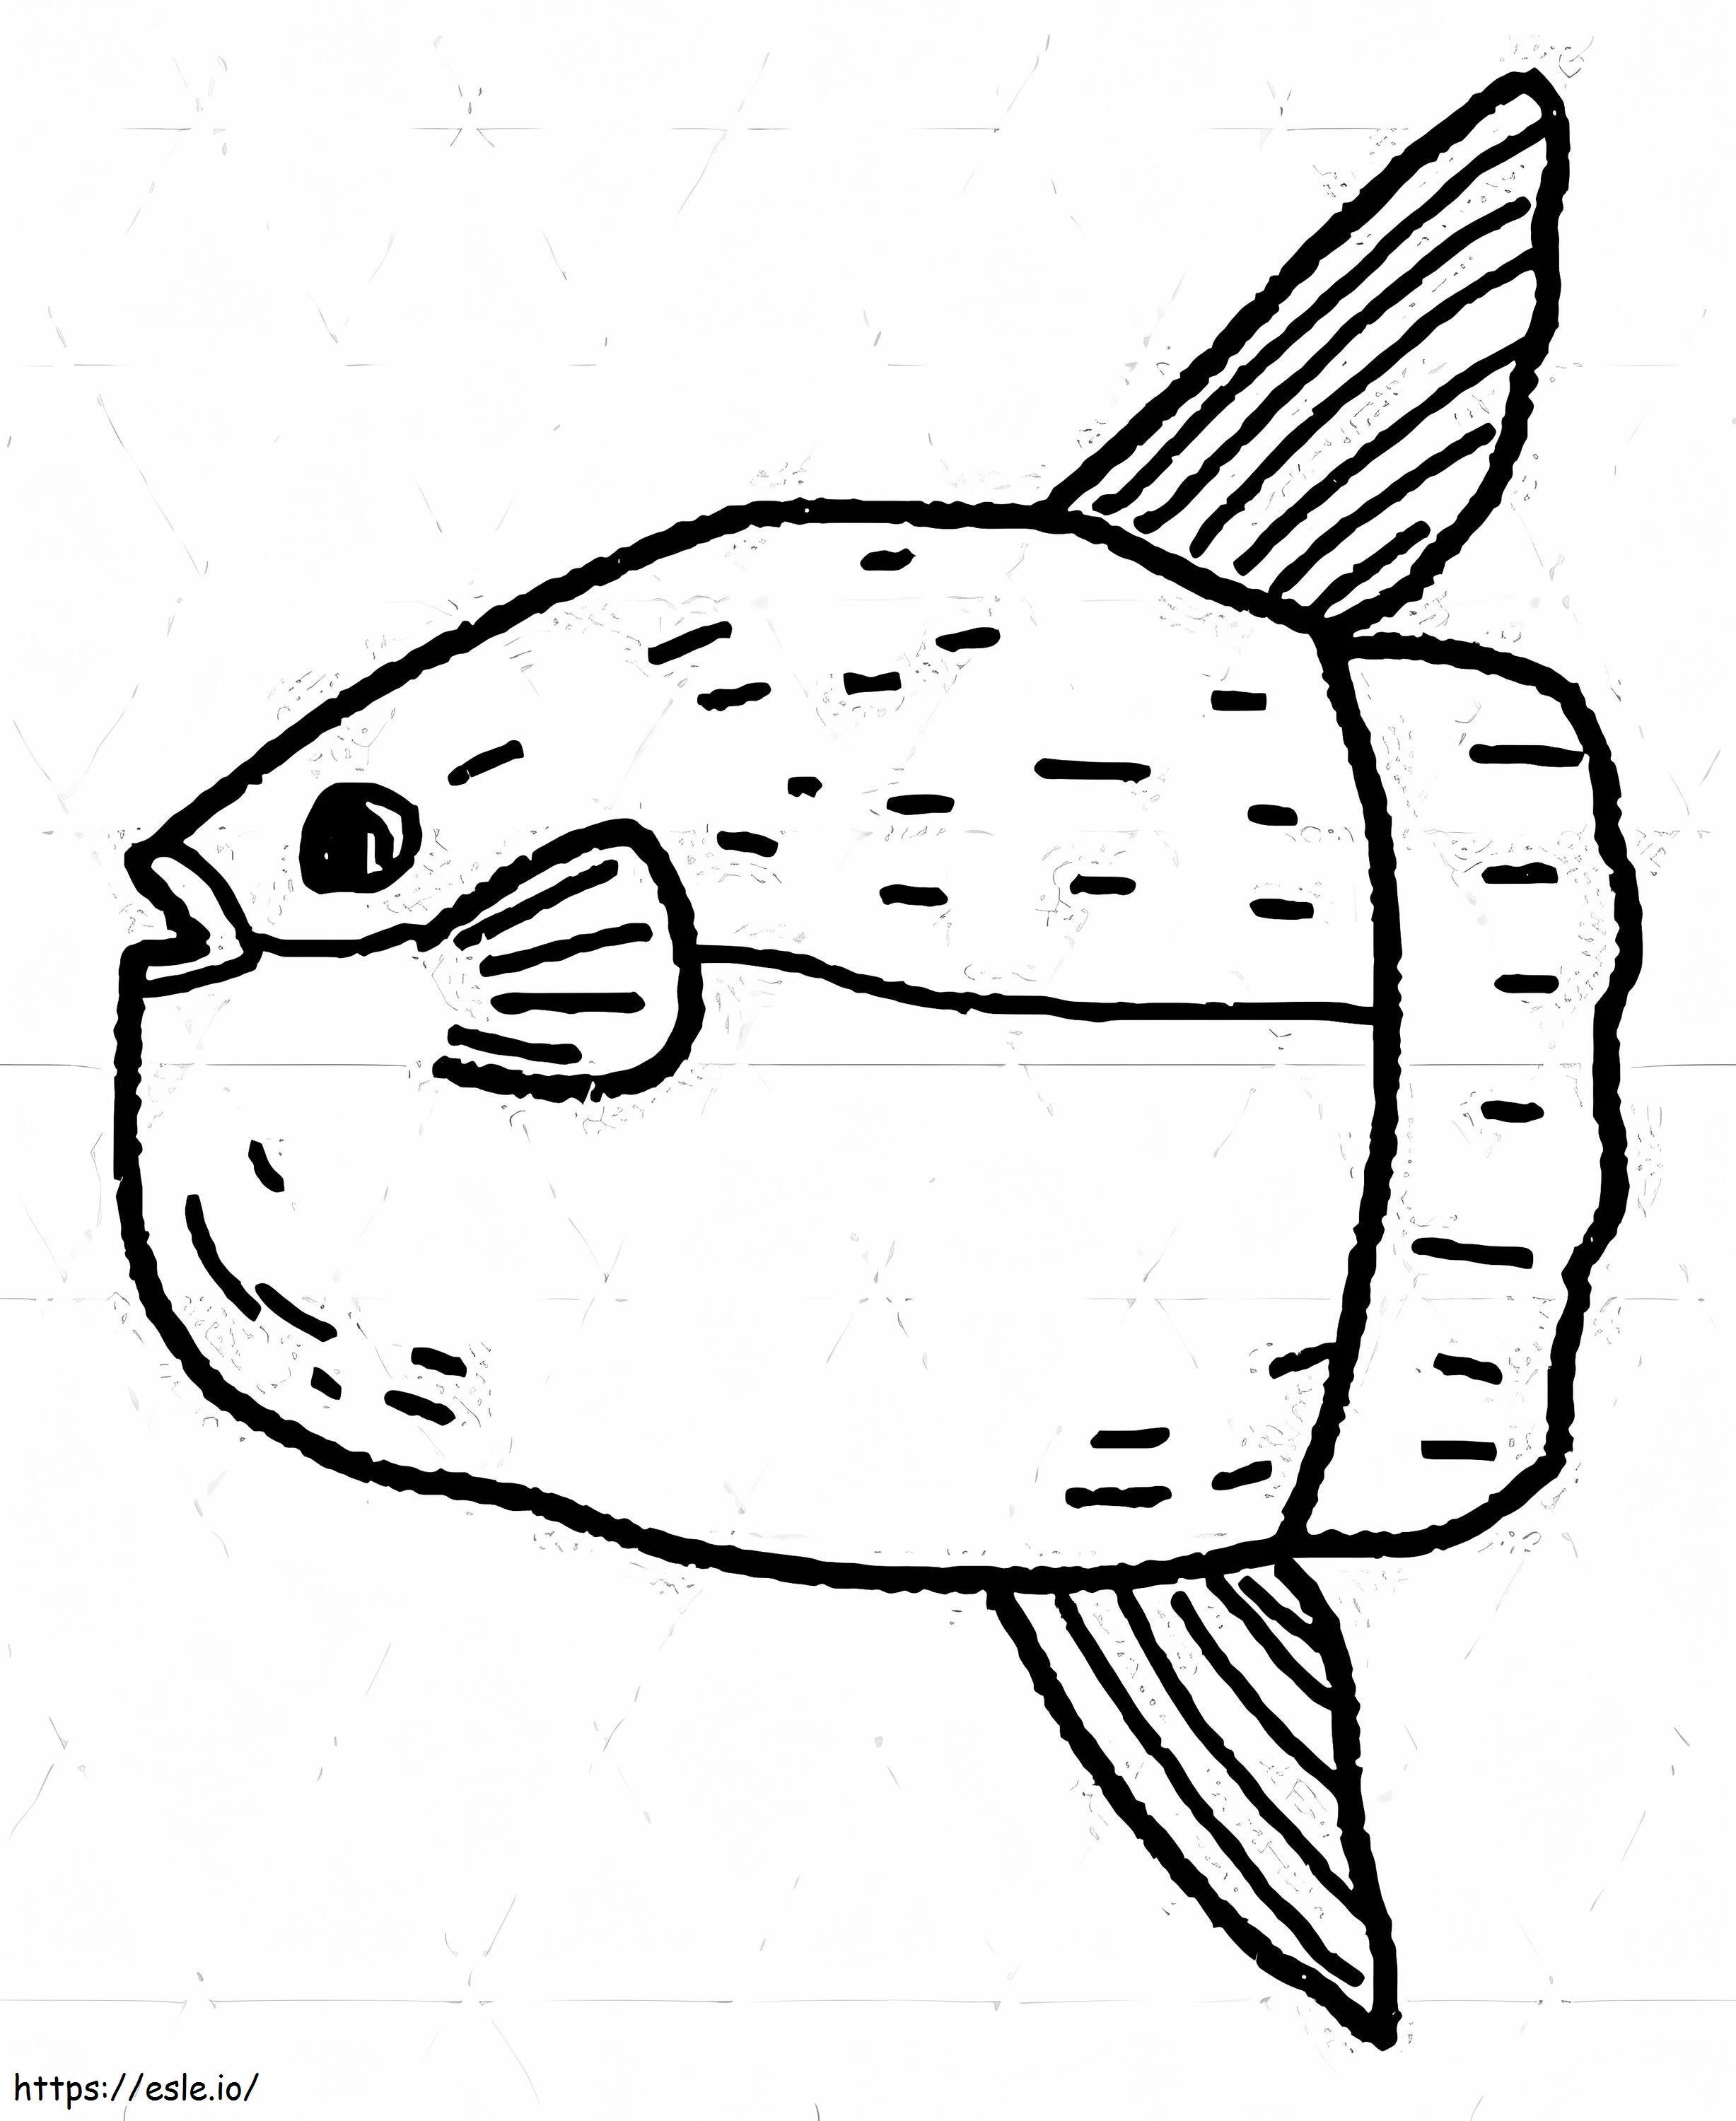 Sunfish de imprimat de colorat